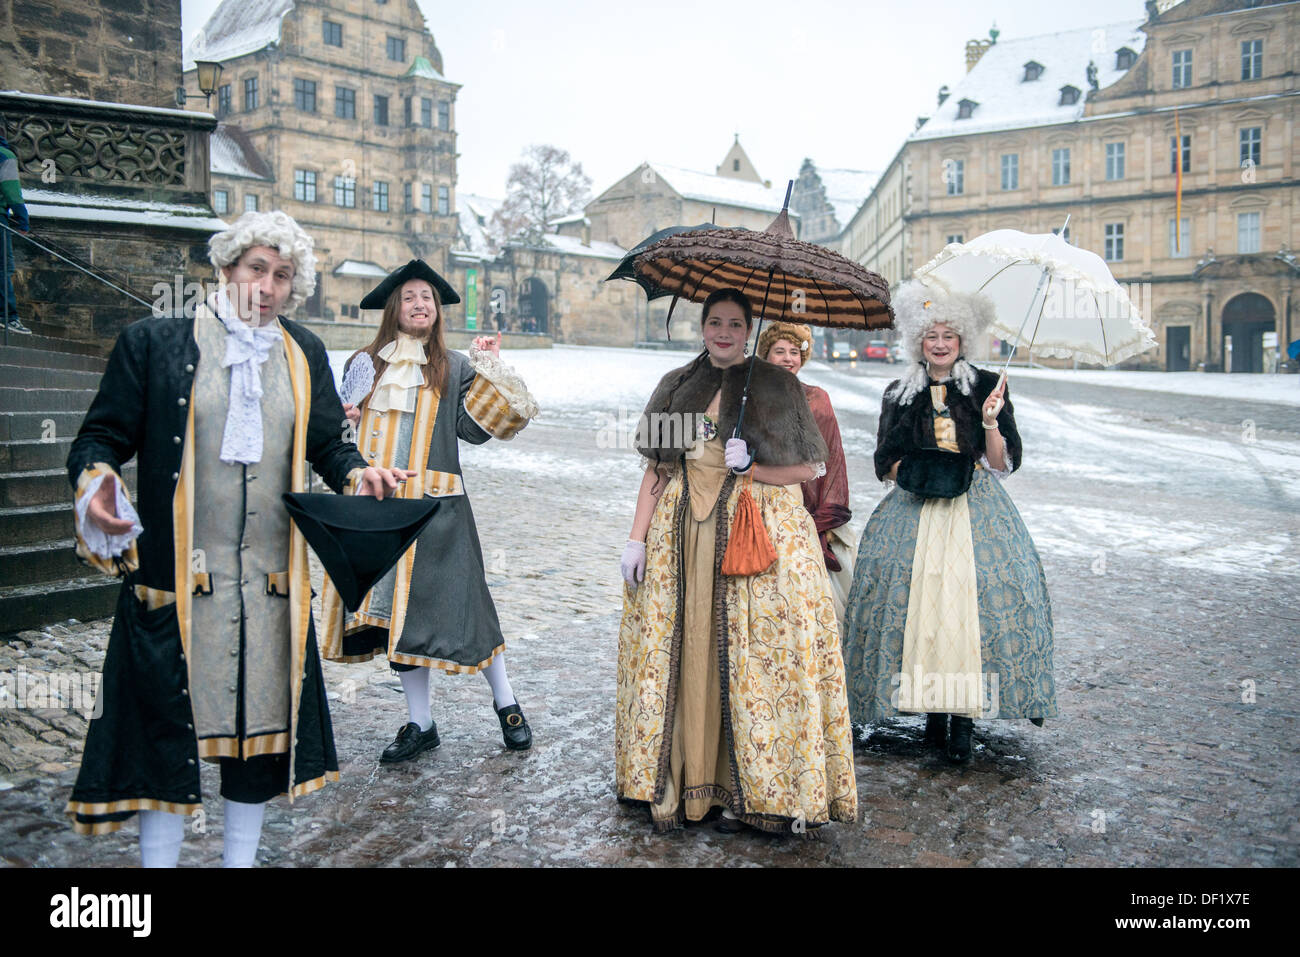 Reenactors in Kostümen aus dem 18. Jahrhundert, neue Residenz Hof, Bamberg, Deutschland Stockfoto